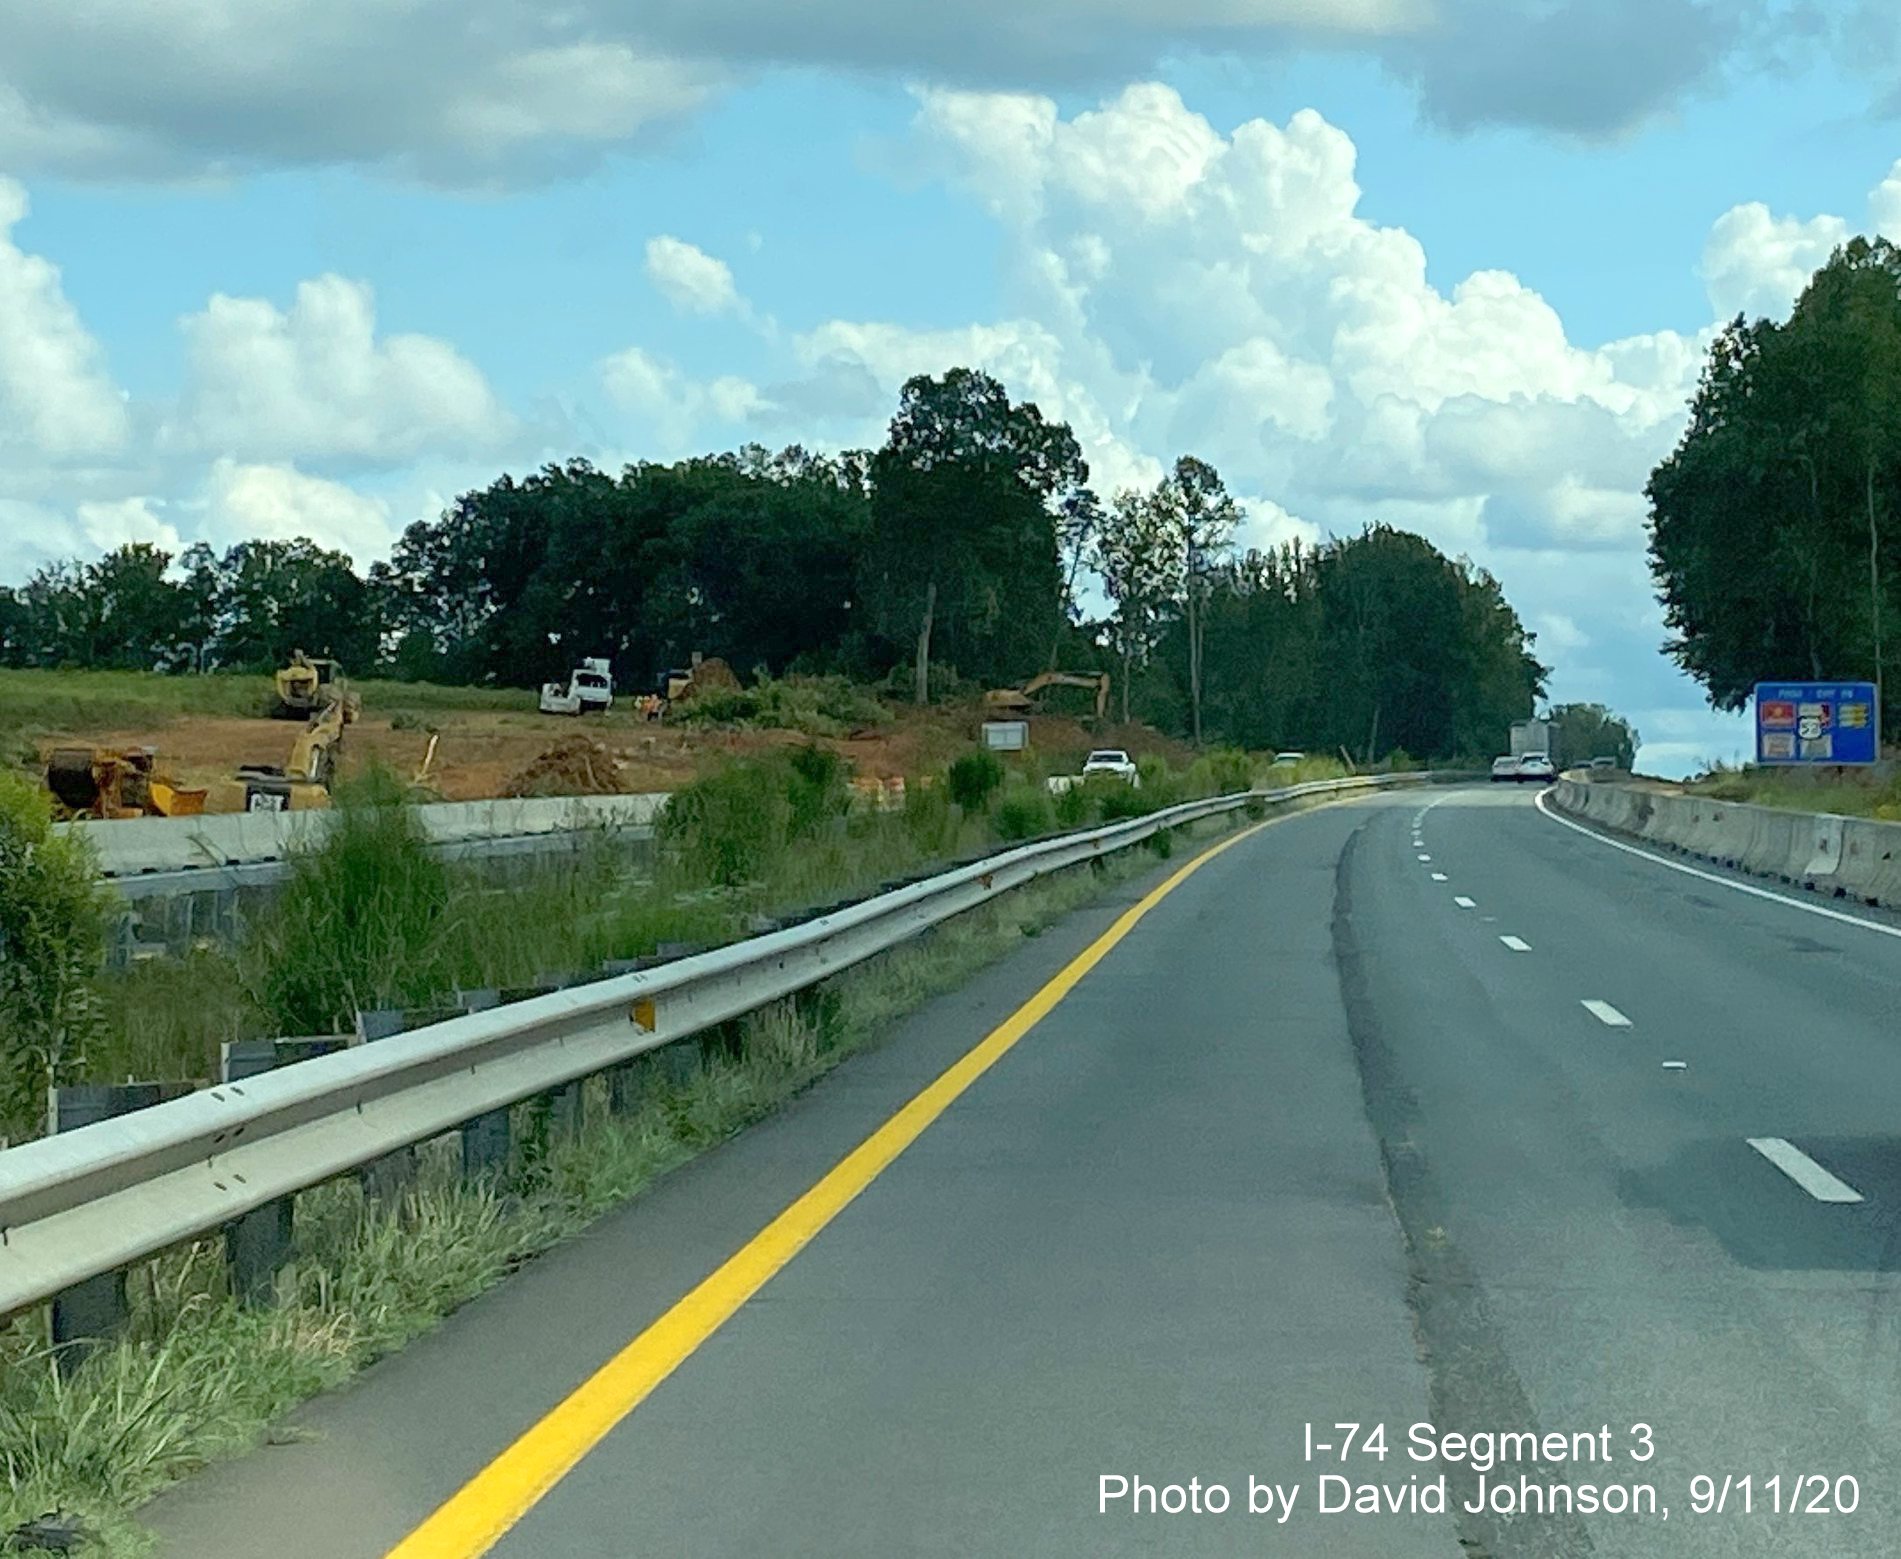 Image of widening work along US 52 Nouth as part of future I-74 Winston Salem Northern Beltway interchange construction, by David Johnson September 2020